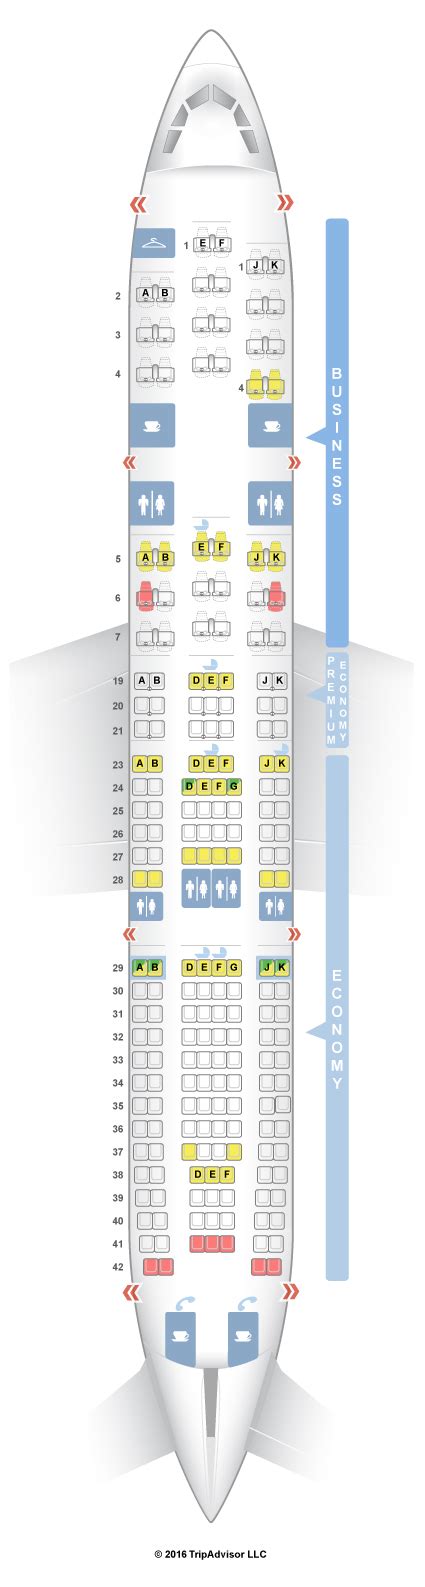 Alitalia Airbus A330 200 Seating Chart